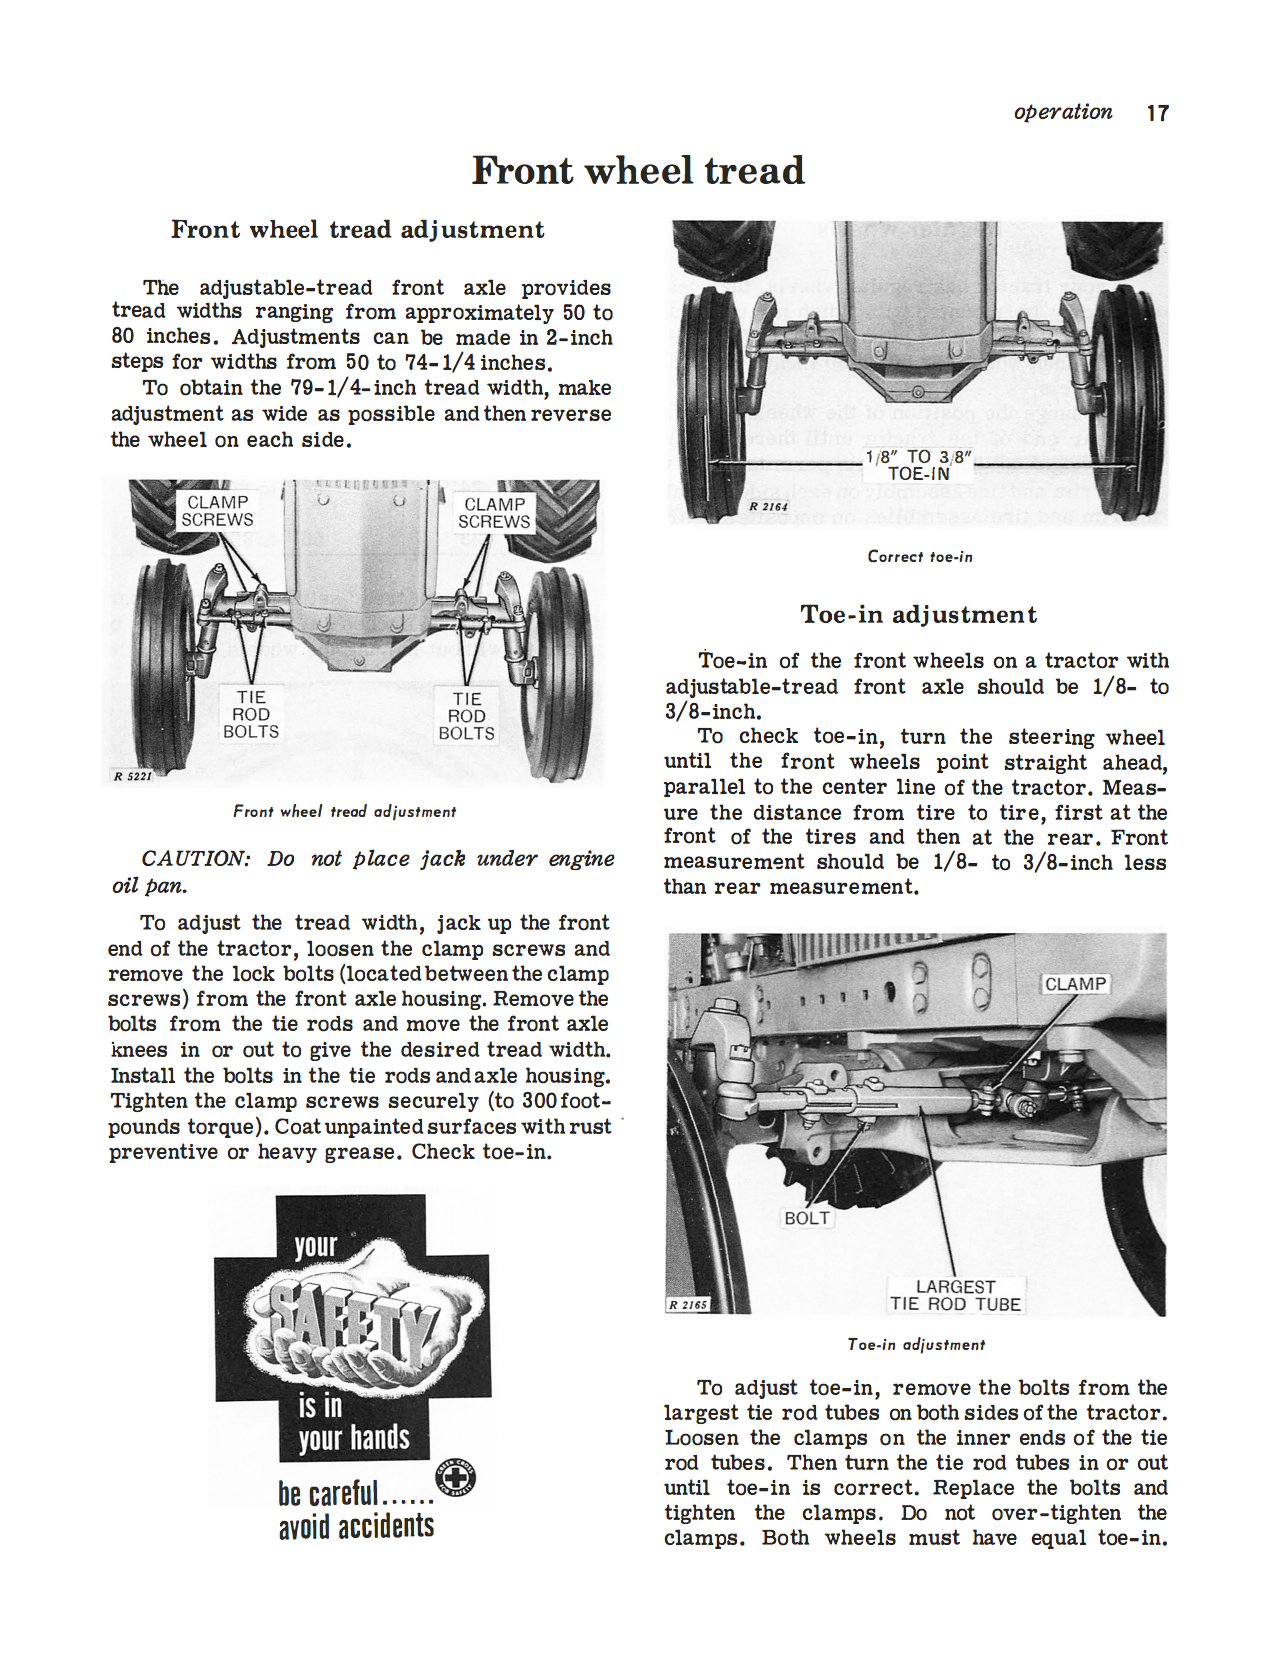 John Deere 3010 Row-Crop Utility Diesel Tractors - Operator's Manual - Ag Manuals - A Provider of Digital Farm Manuals - 2